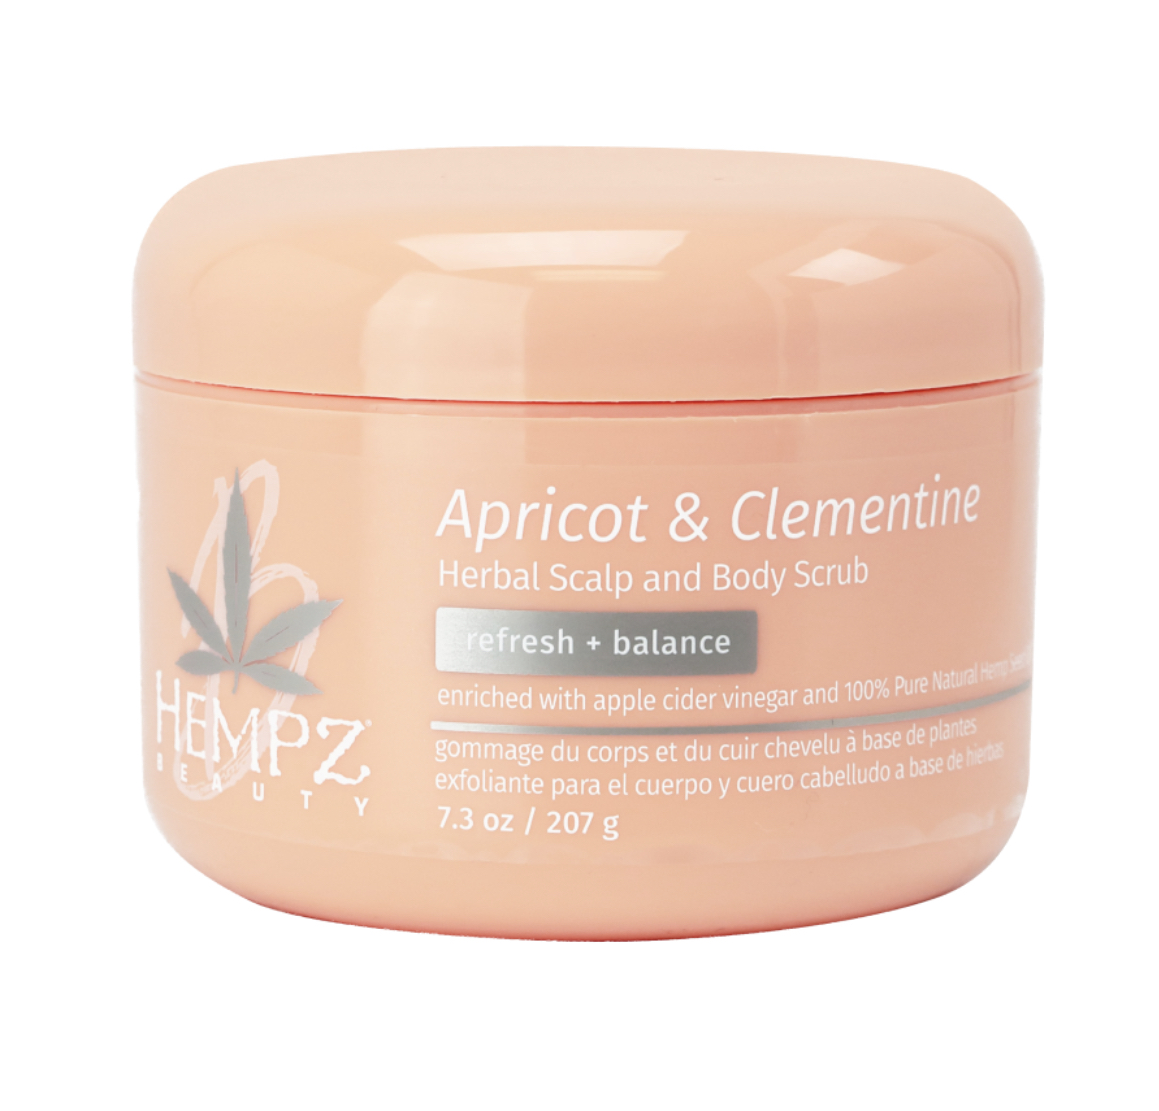 фото Скраб для кожи hempz apricot & clementine herbal scalp & body scrub, 207 г